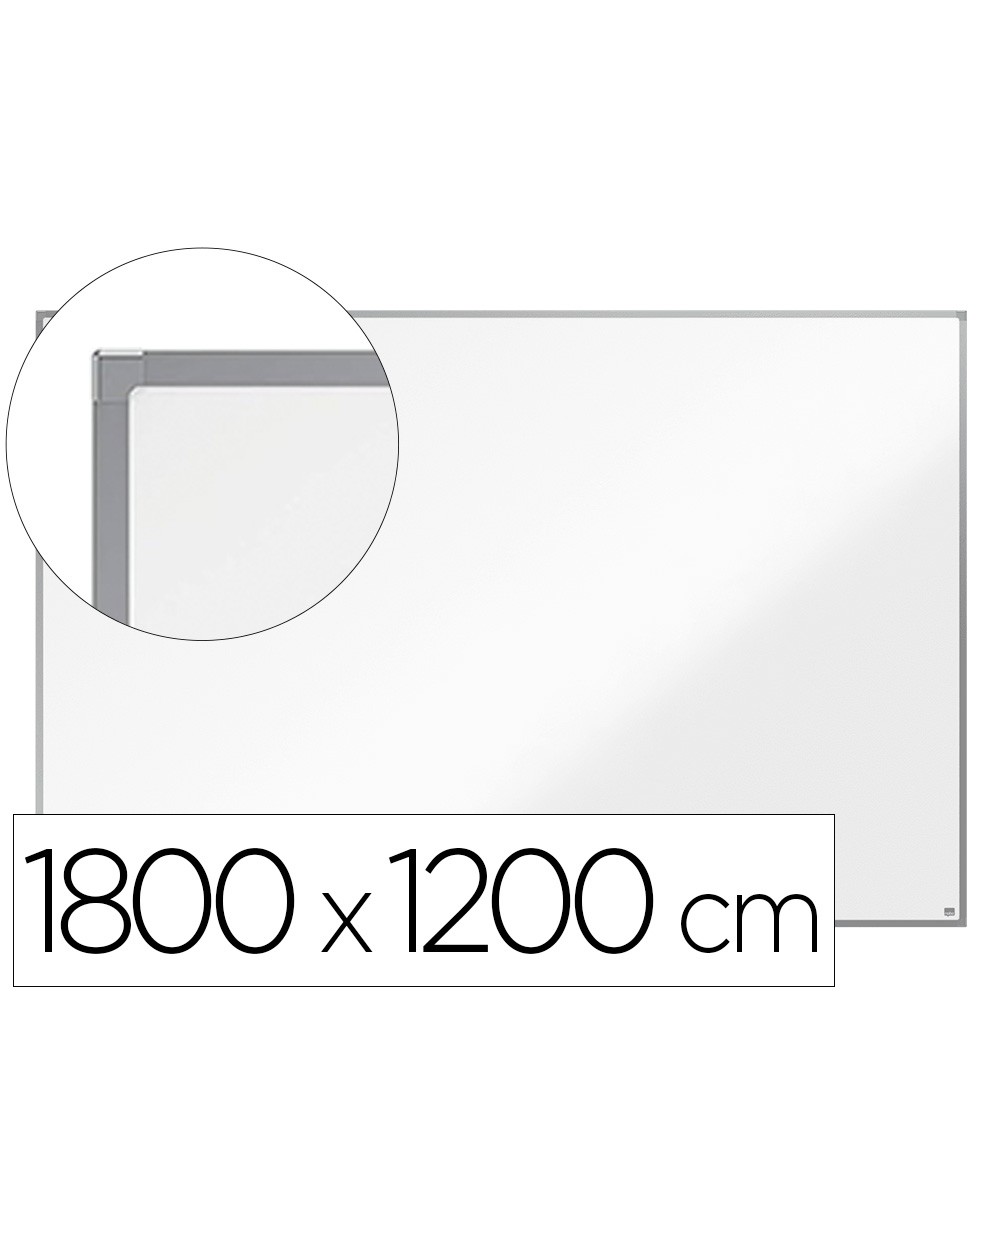 Pizarra blanca nobo essence acero vitrificado magnetica 1800x1200 mm